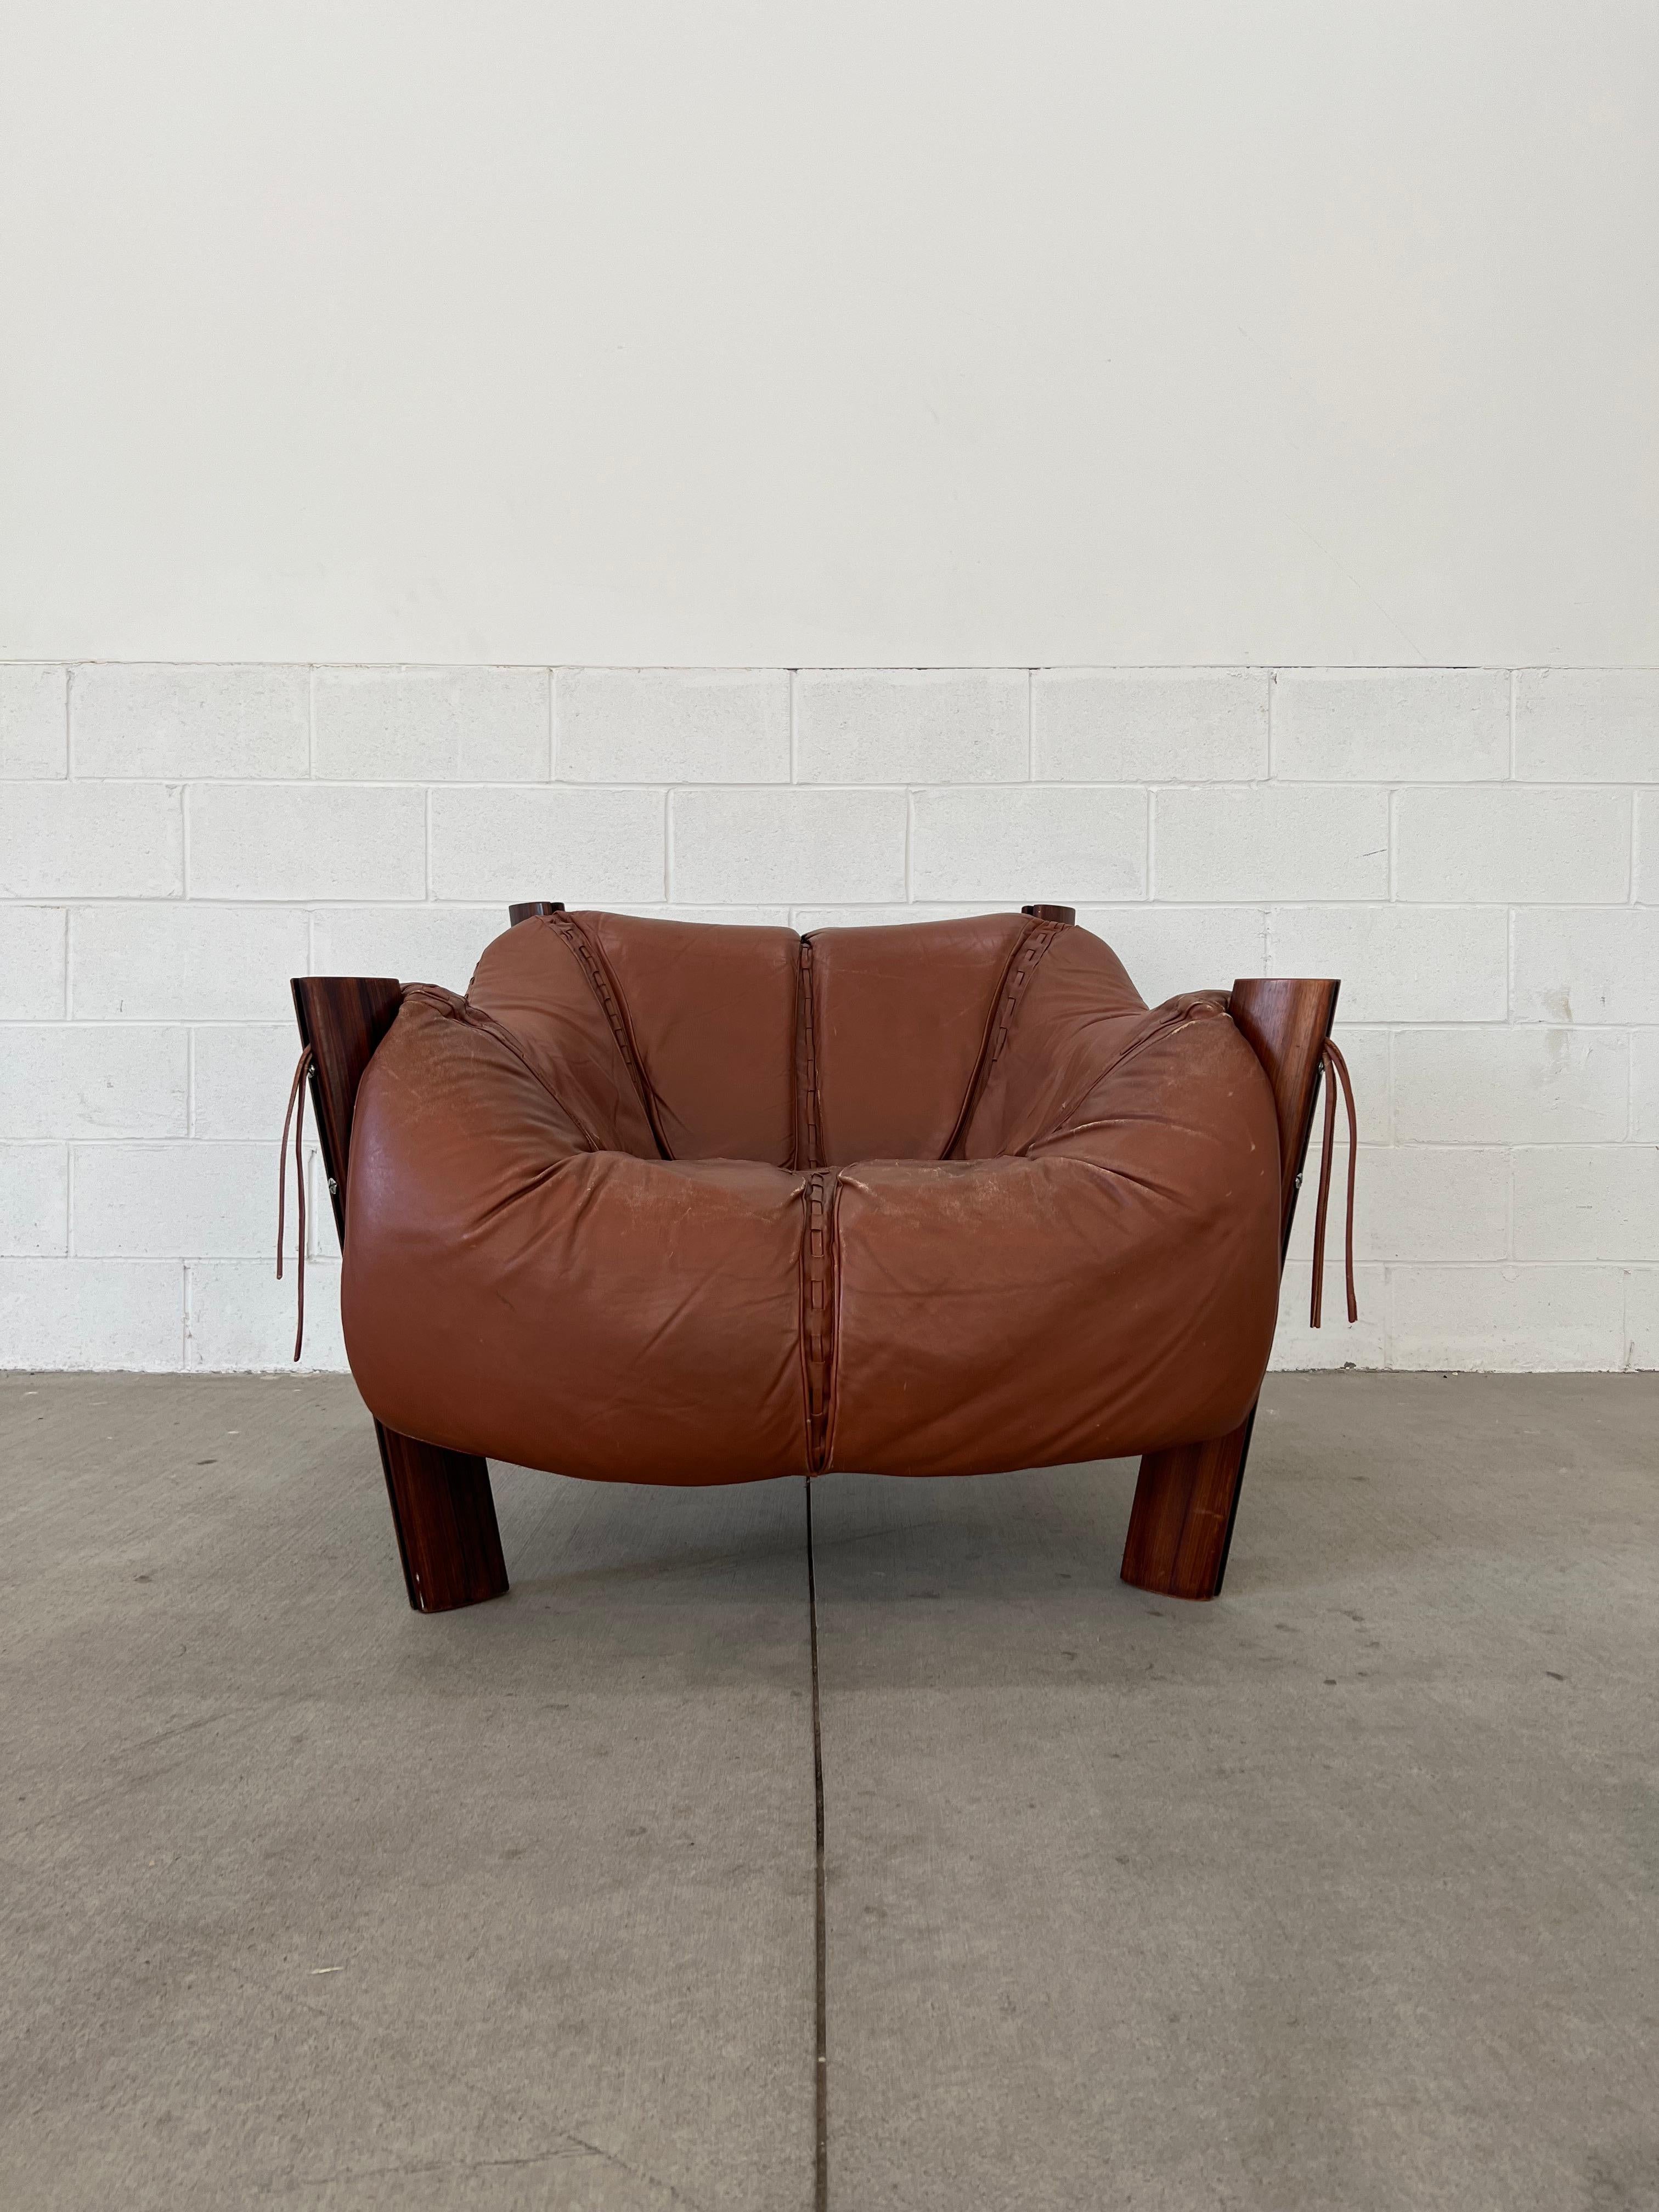 Percival Lafer Mp 211 Leather Brazilian Lounge Chair 1